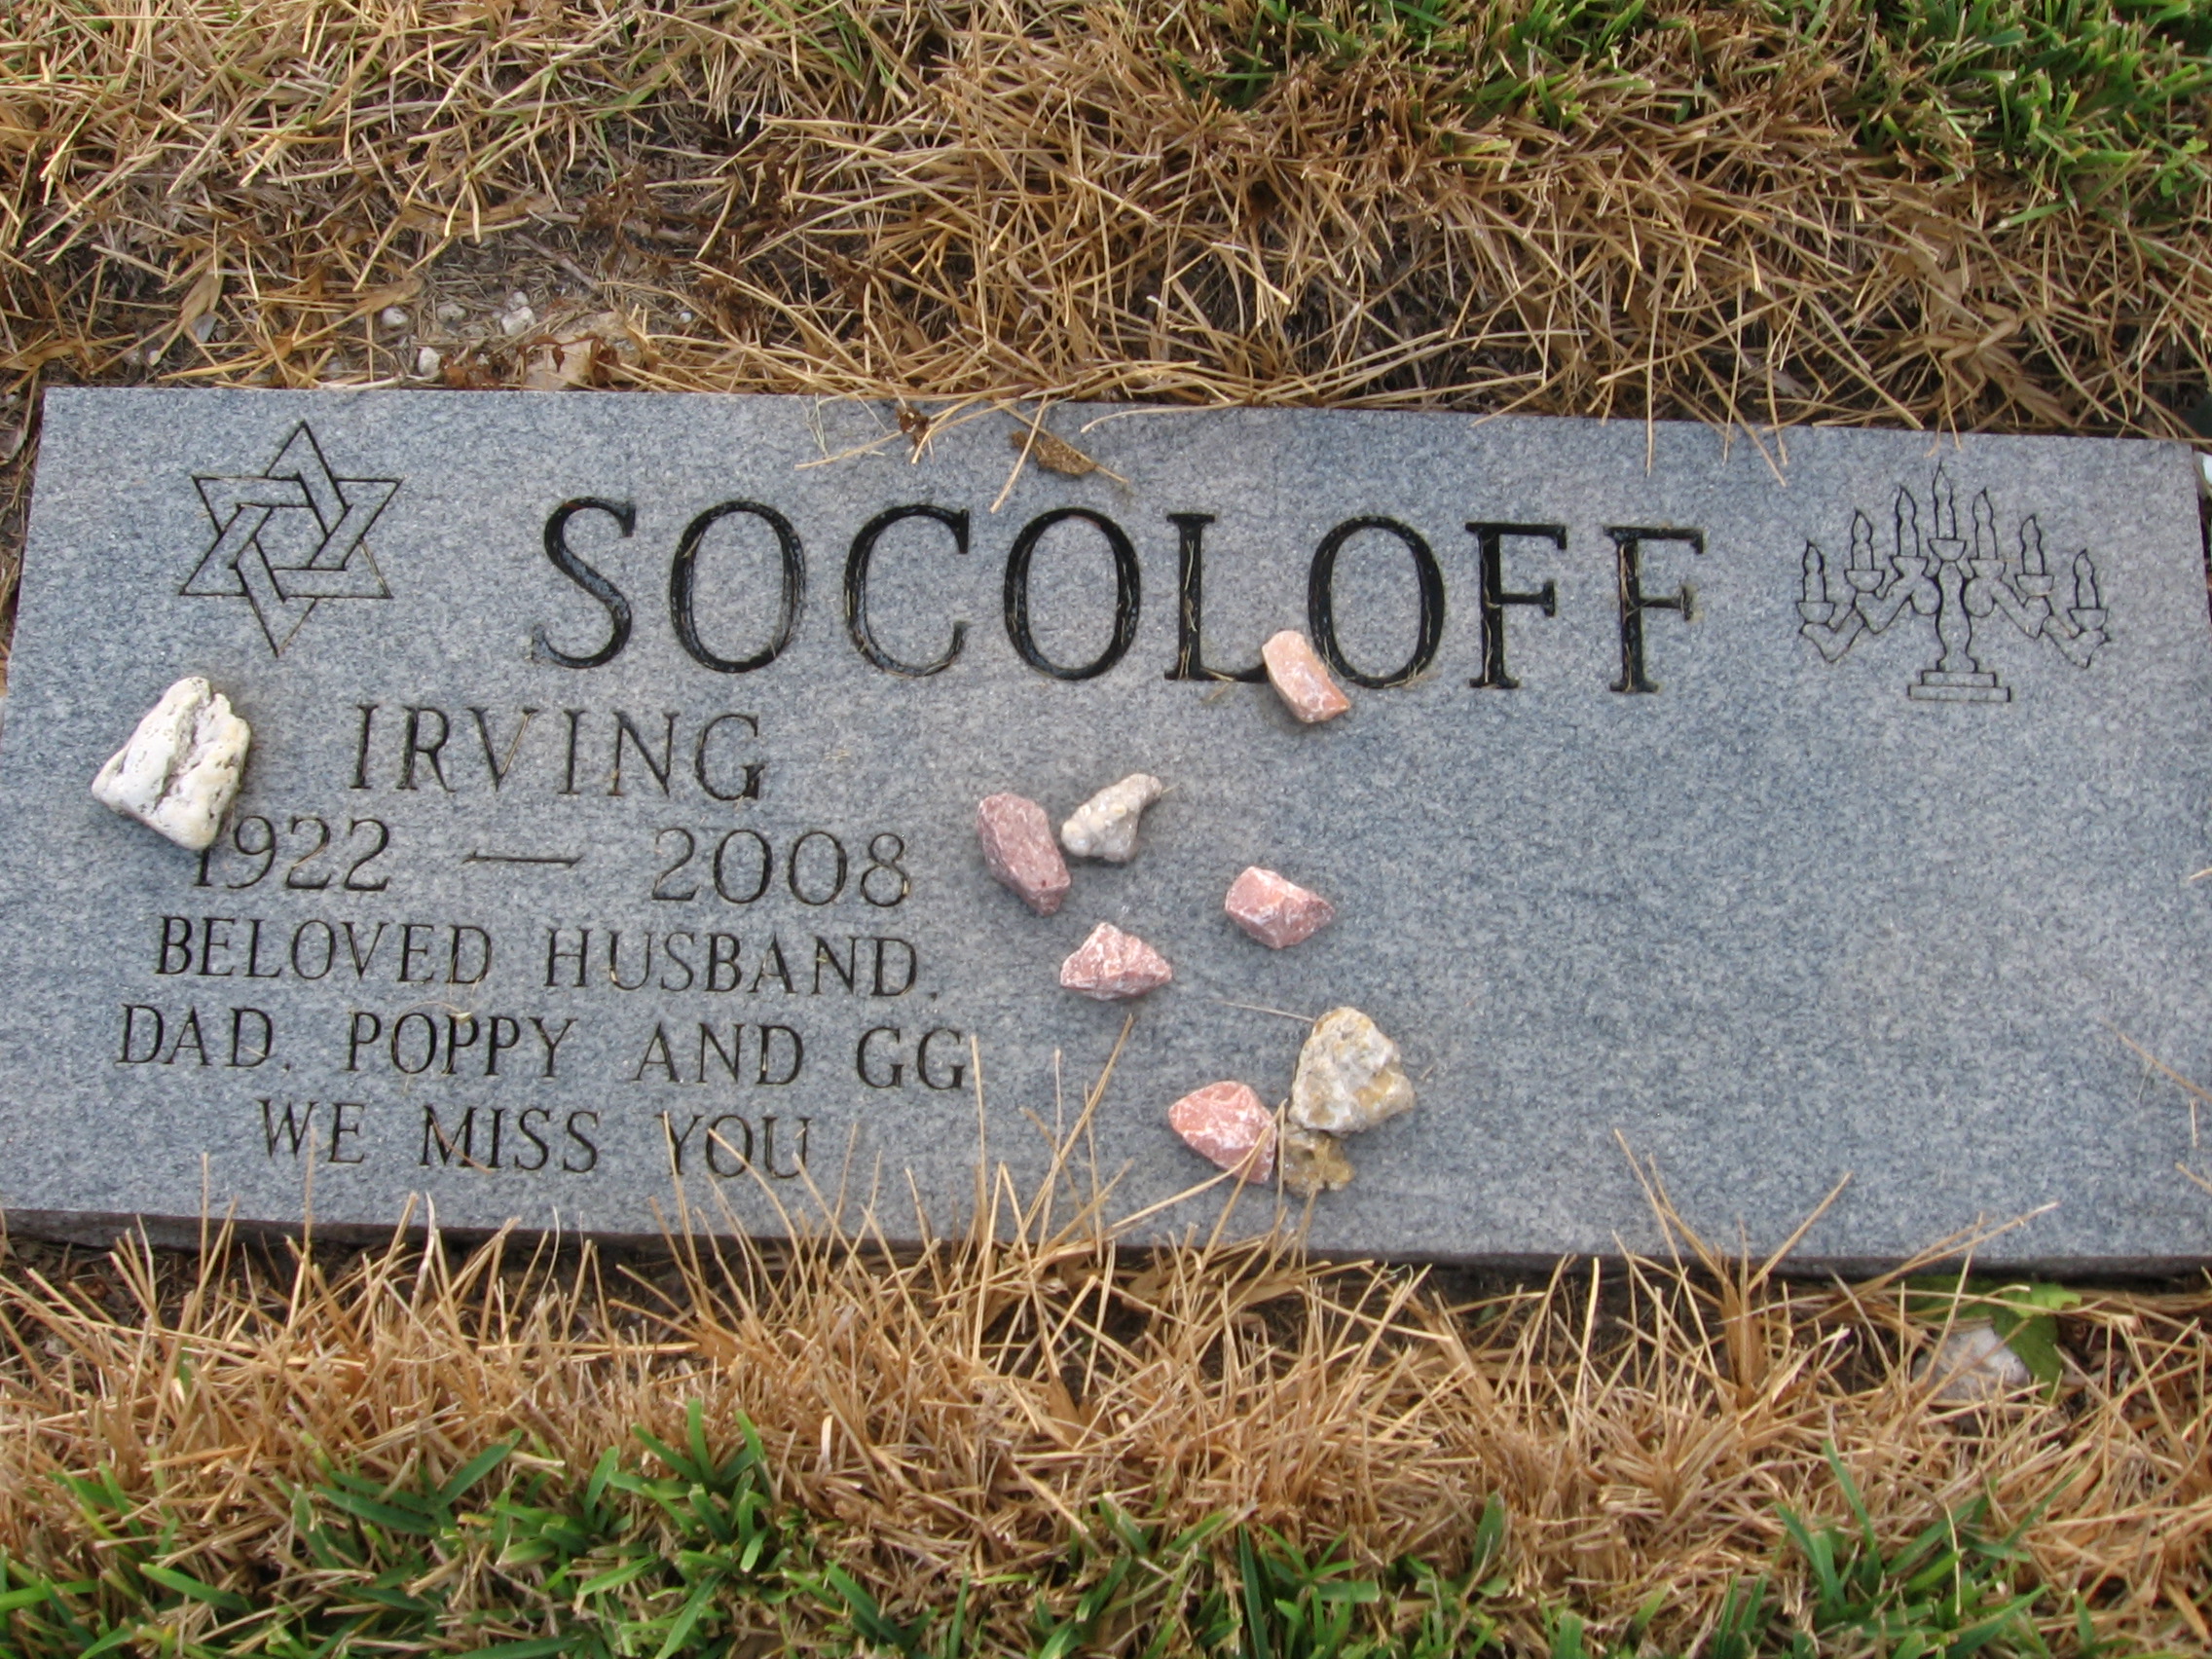 Irving Socoloff